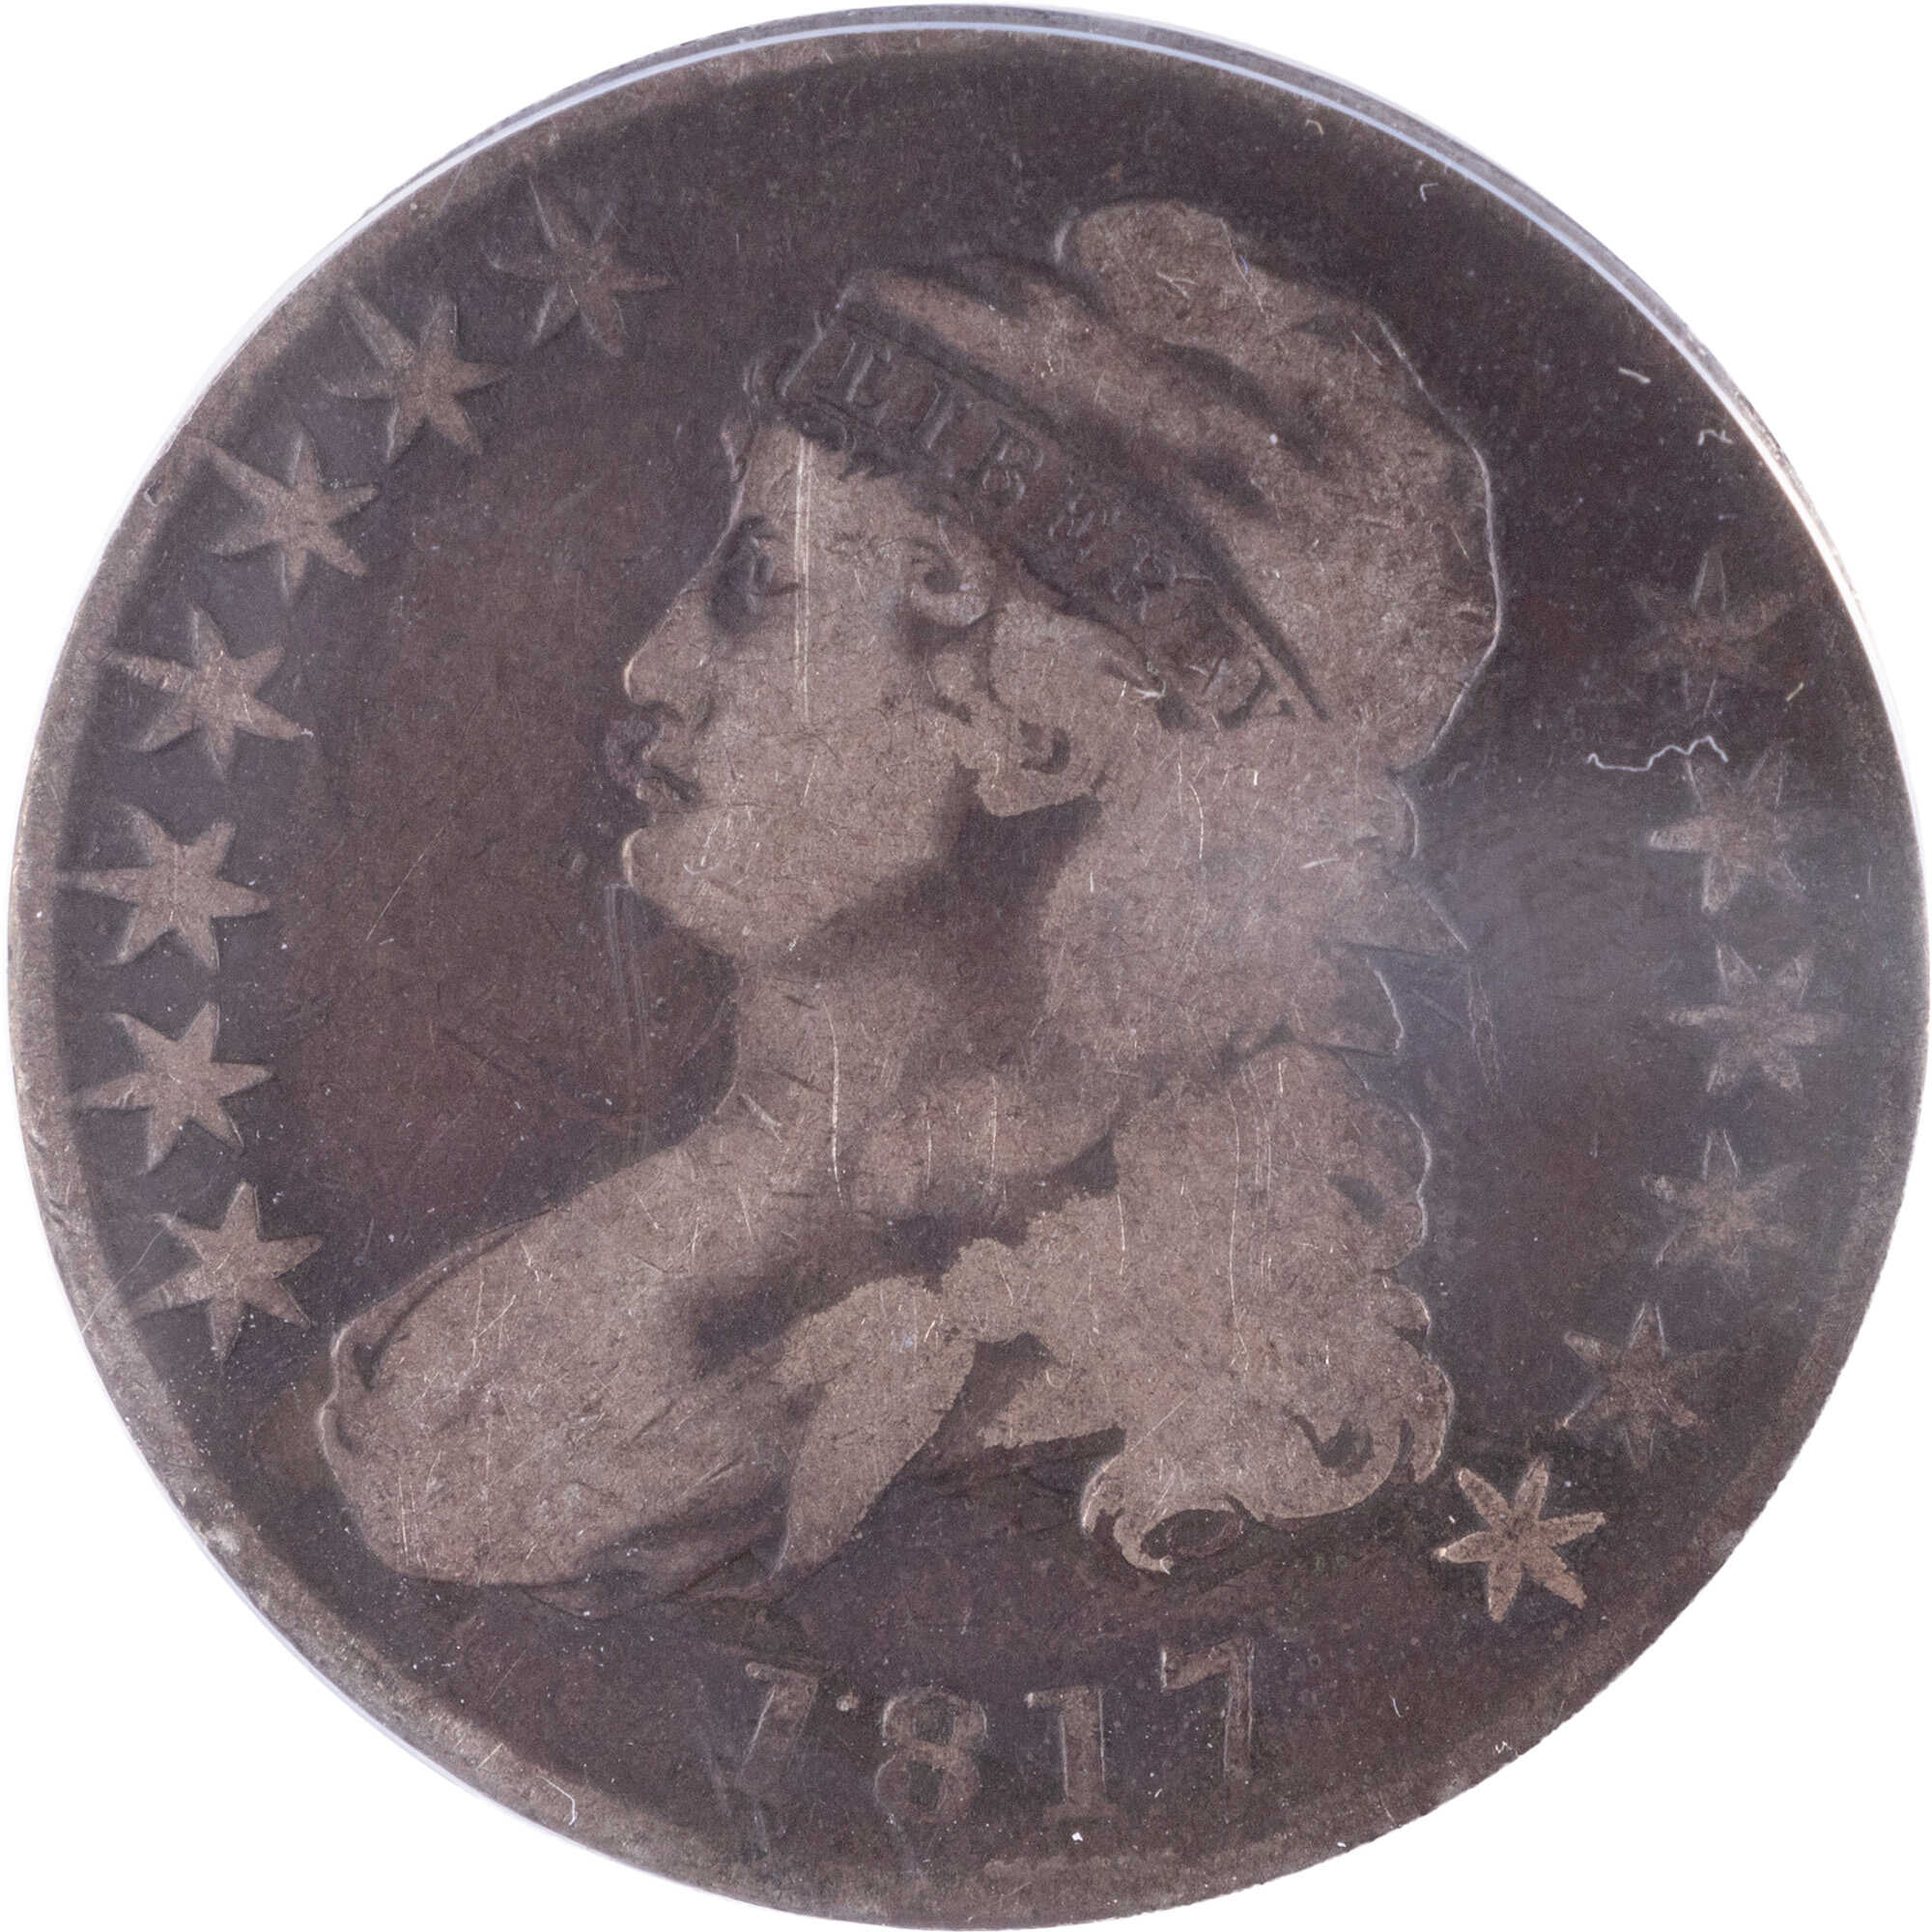 1817 Capped Bust Half Dollar VG 10 ANACS Silver 50c Coin SKU:CPC12853